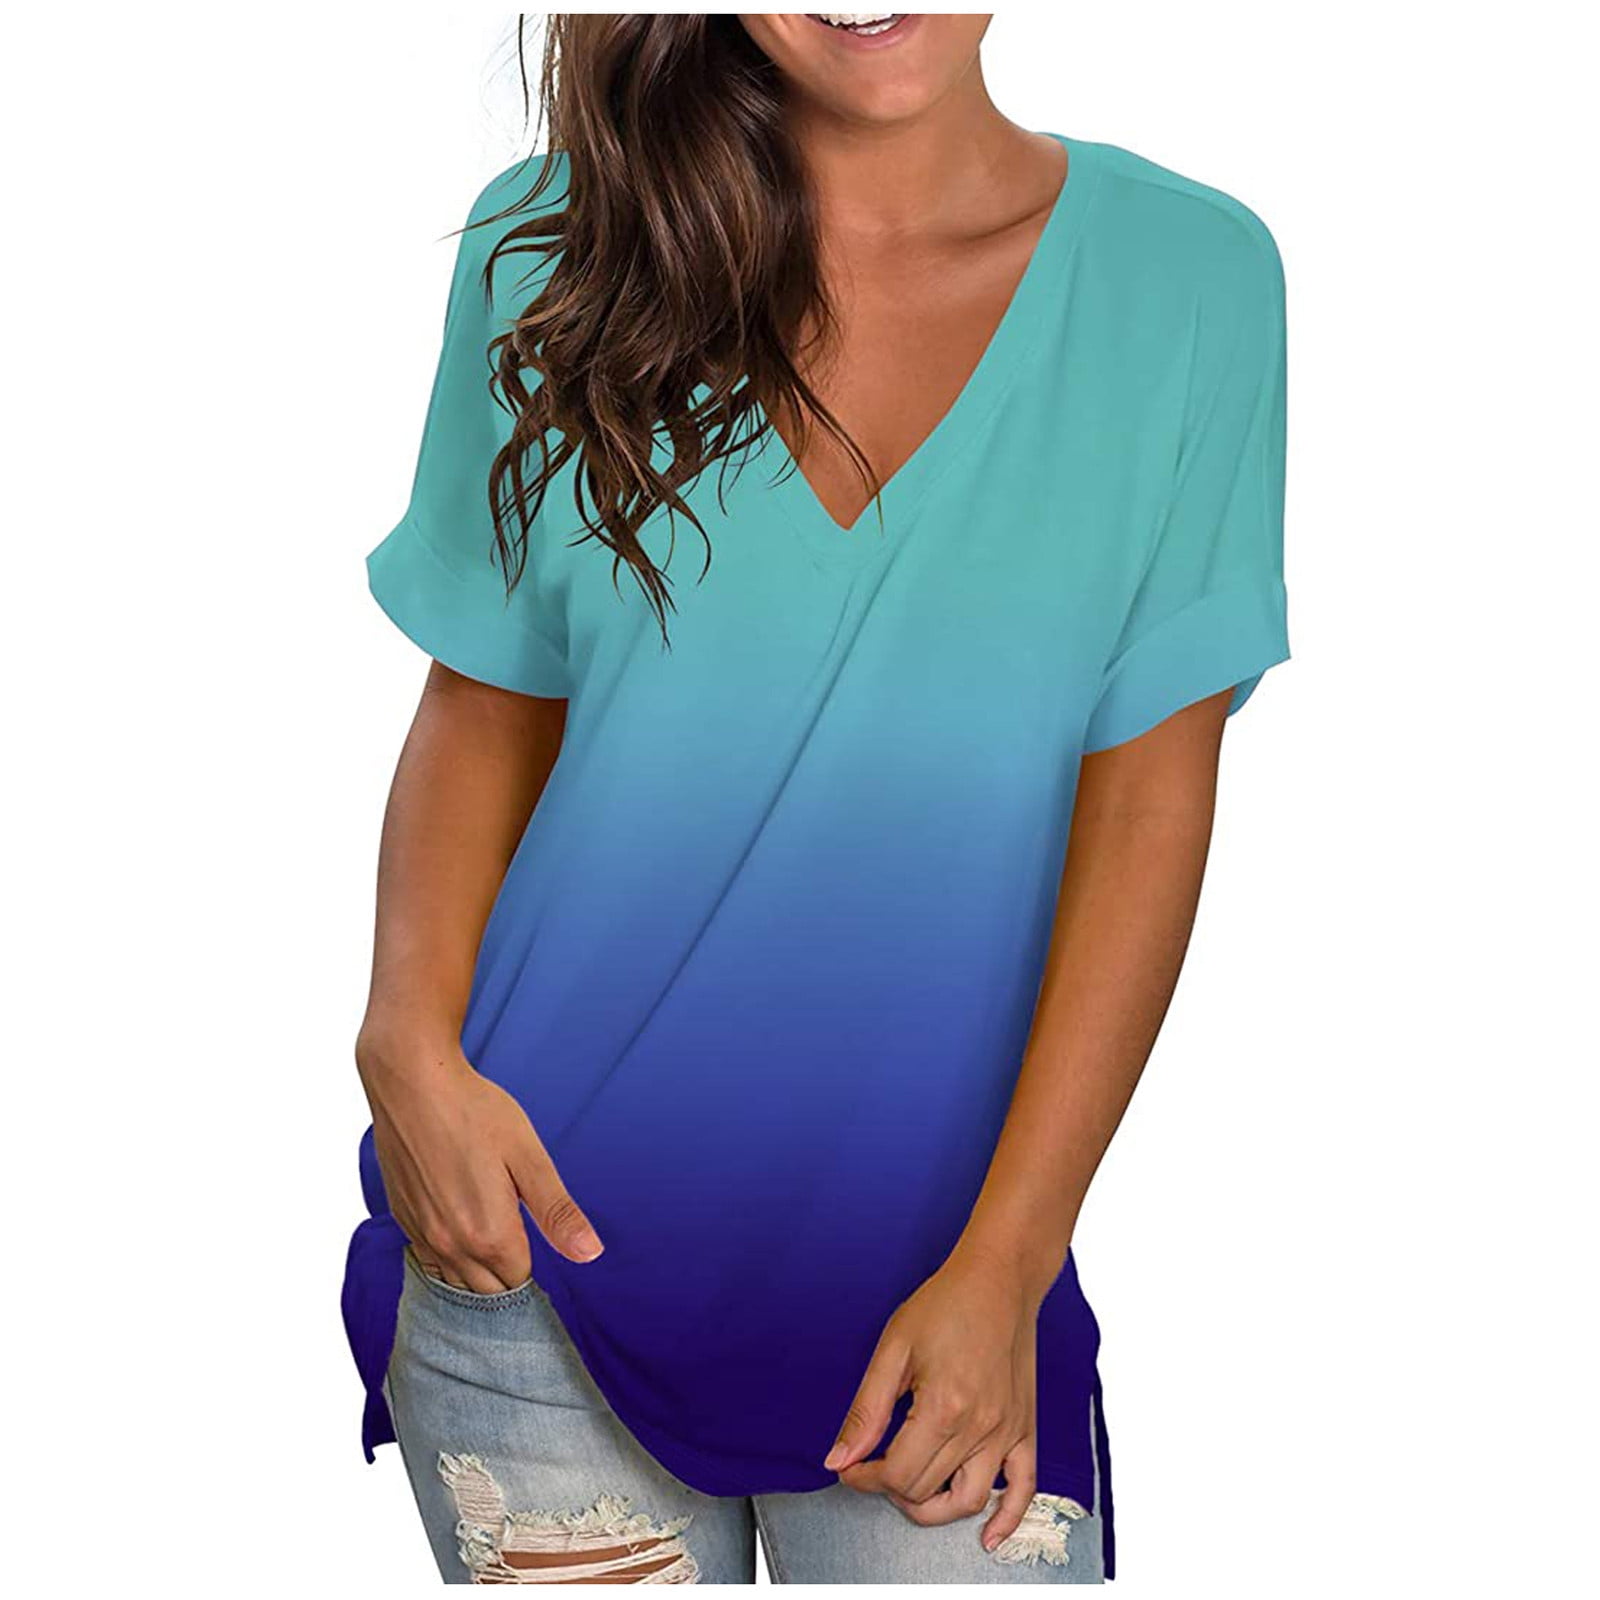 Womens Stitching Off-Shoulder V-Neck Top Shirt Blouse DaySeventh Summer Deals 2019 